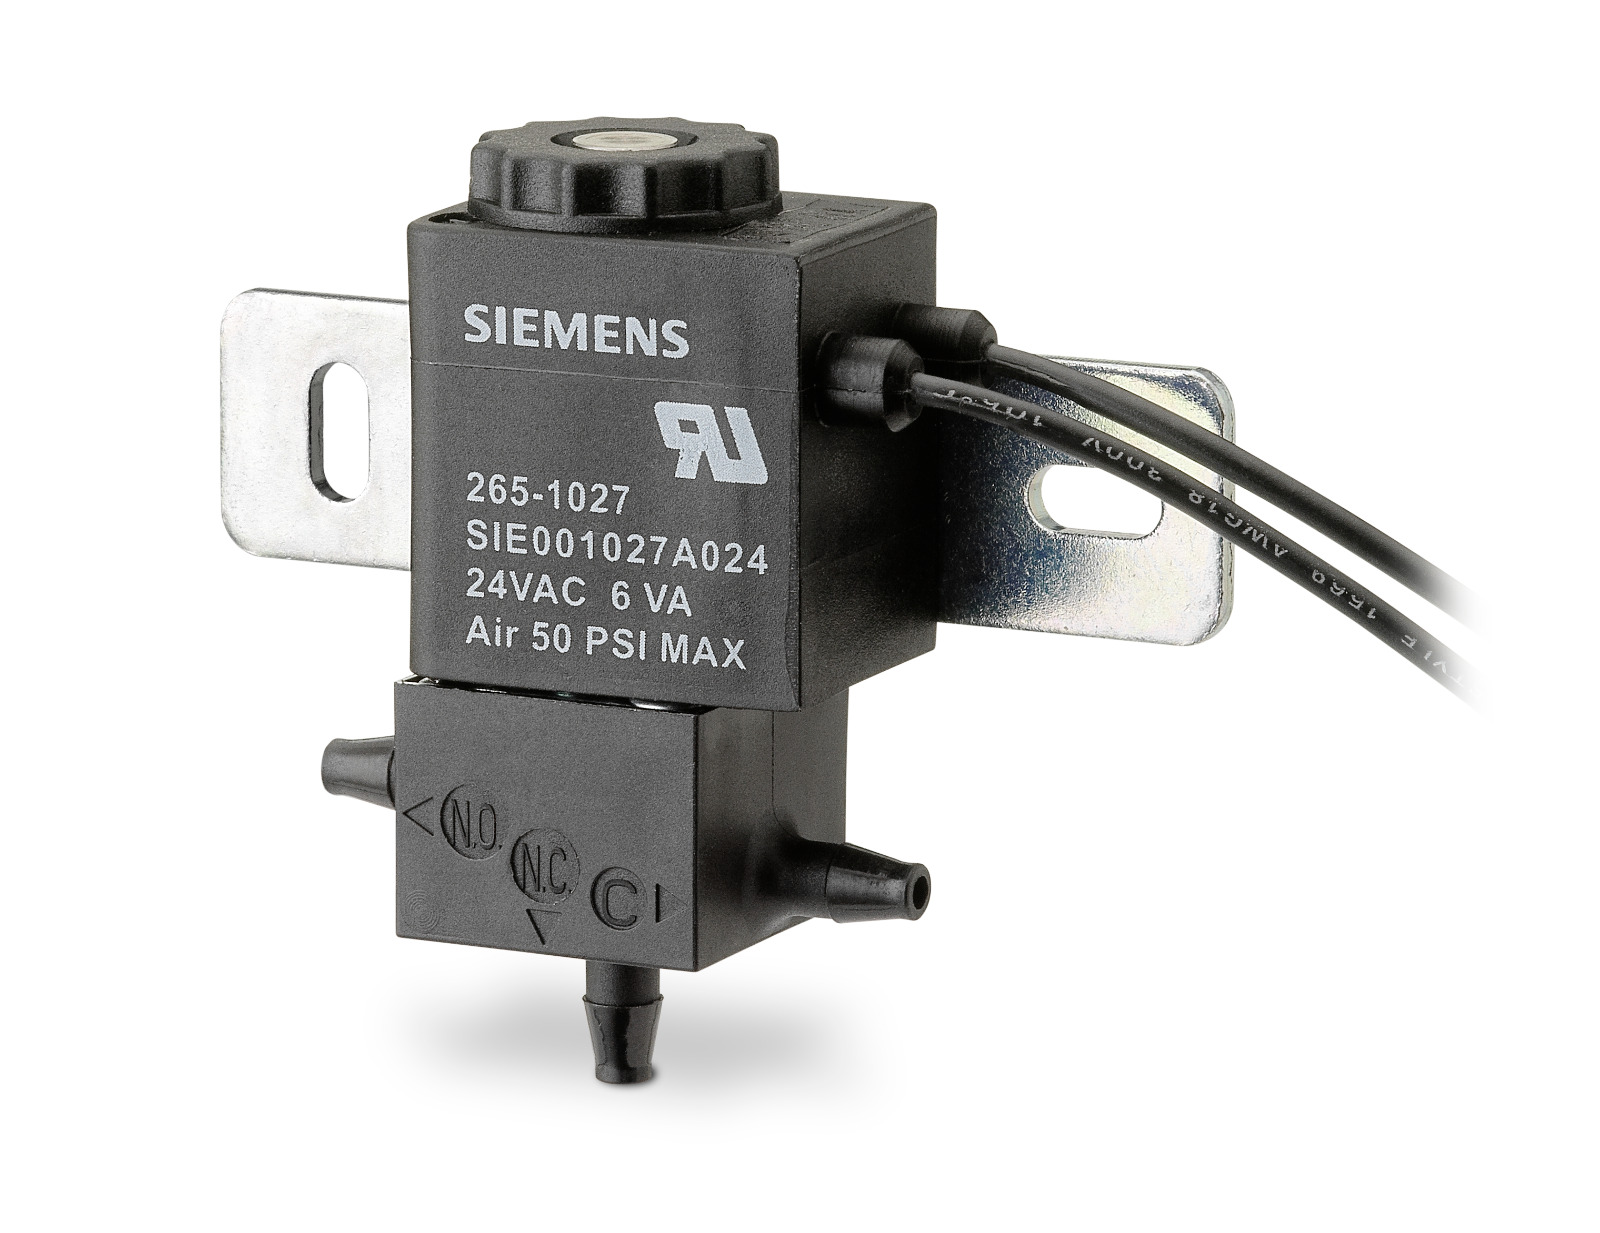 SIEMENS 265-1027 Solenoid Air Valve, 24VAC, 3 Way Open Frame Electro-Pneumatic